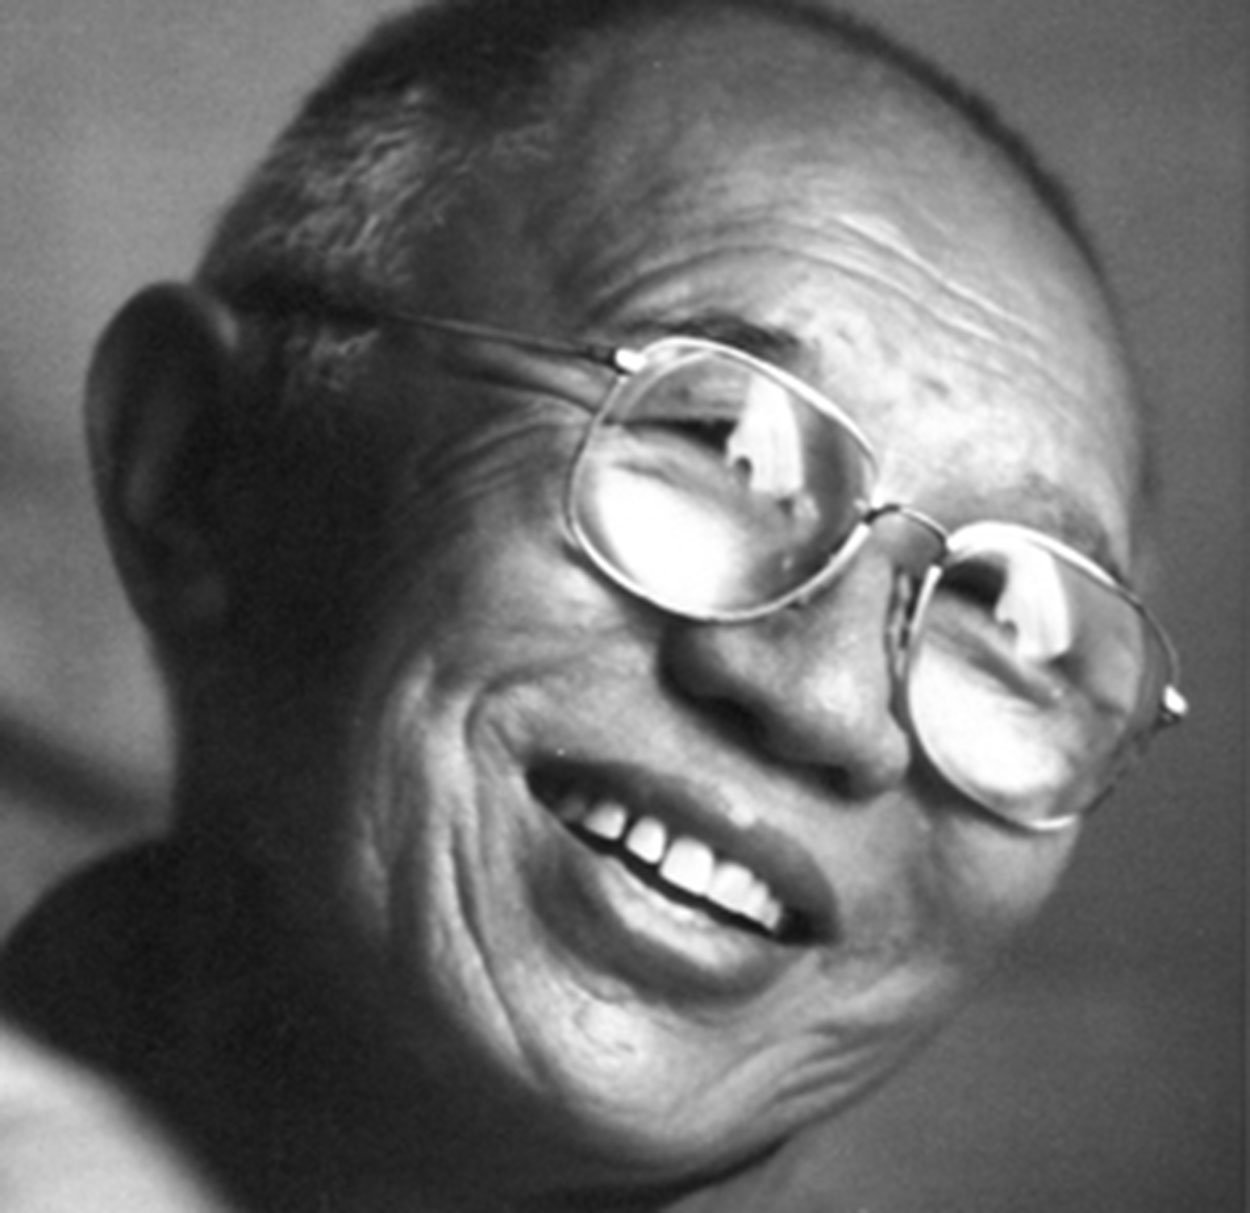 Tulku Urgyen Rinpoche